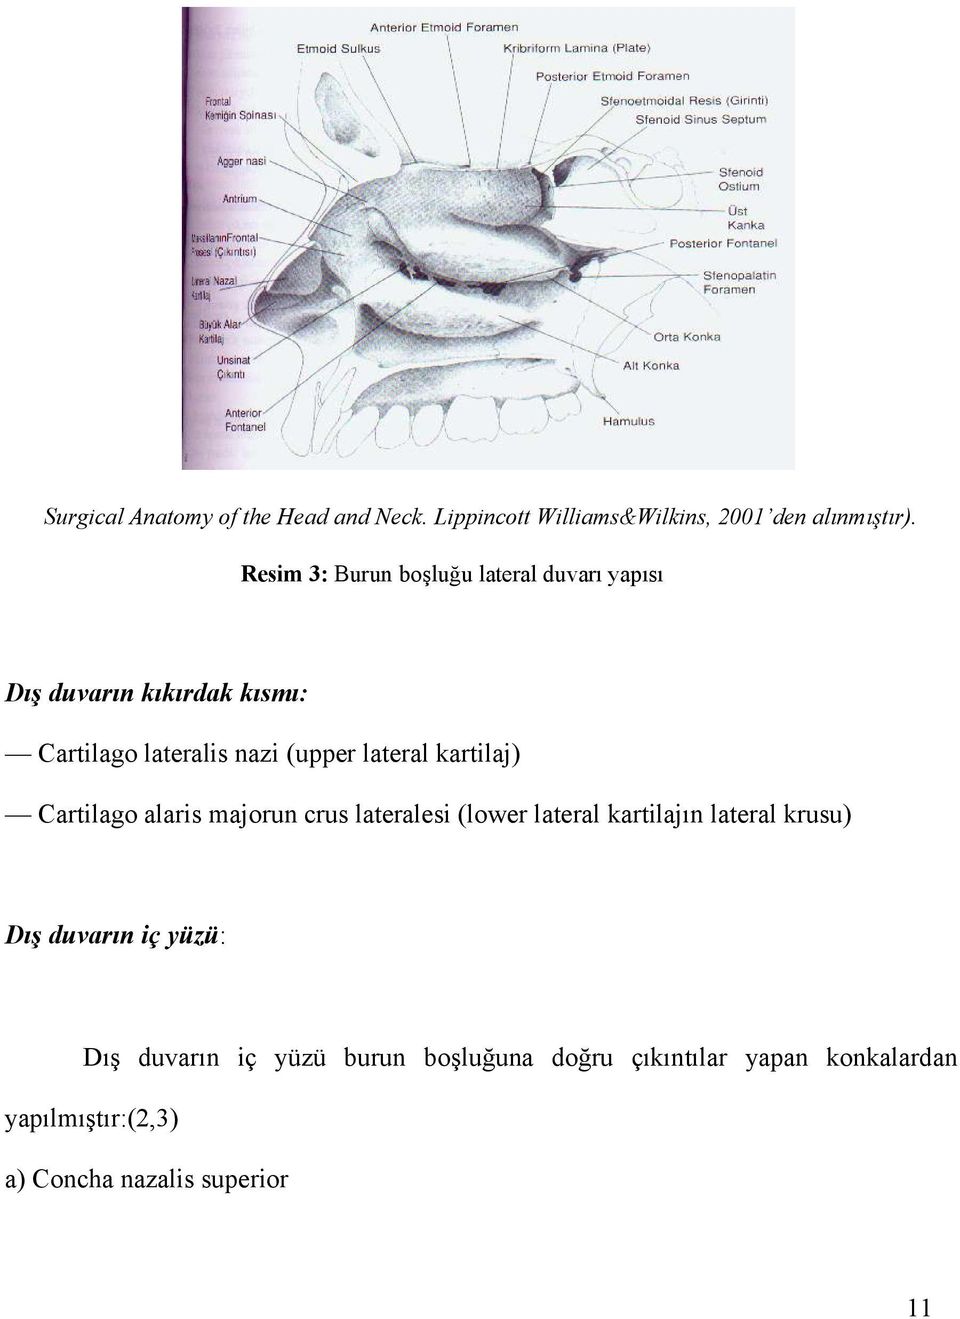 lateral kartilaj) Cartilago alaris majorun crus lateralesi (lower lateral kartilajın lateral krusu) Dış